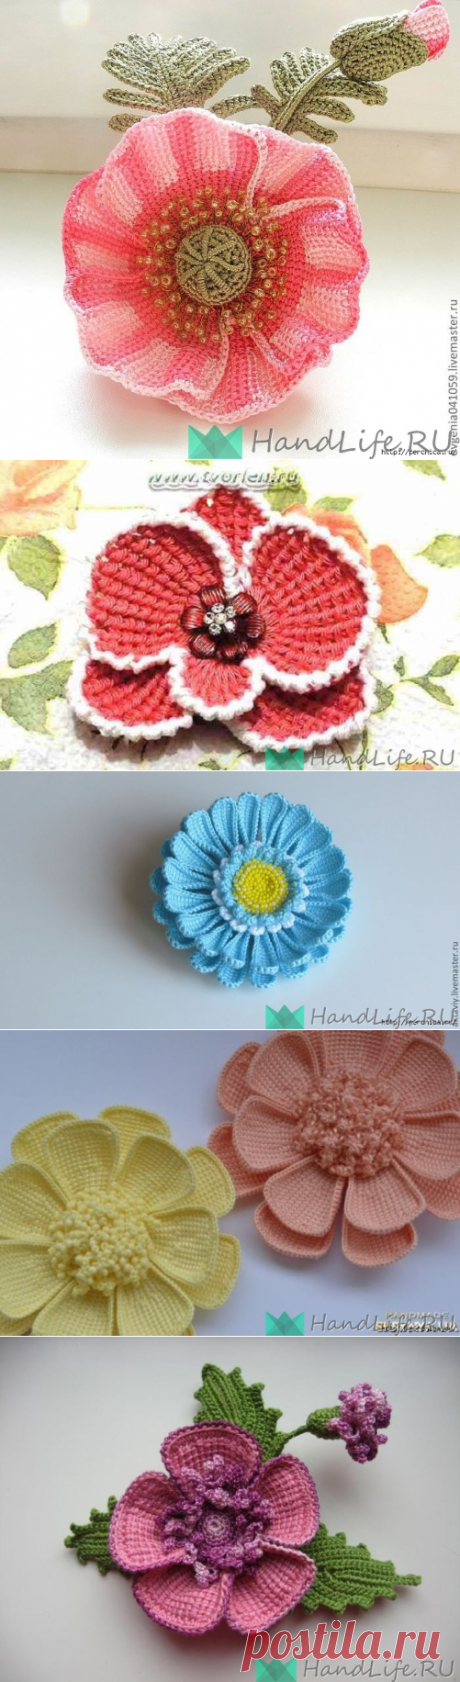 Цветок, тунисское вязание крючком (видео) / Мое творчество - вязание